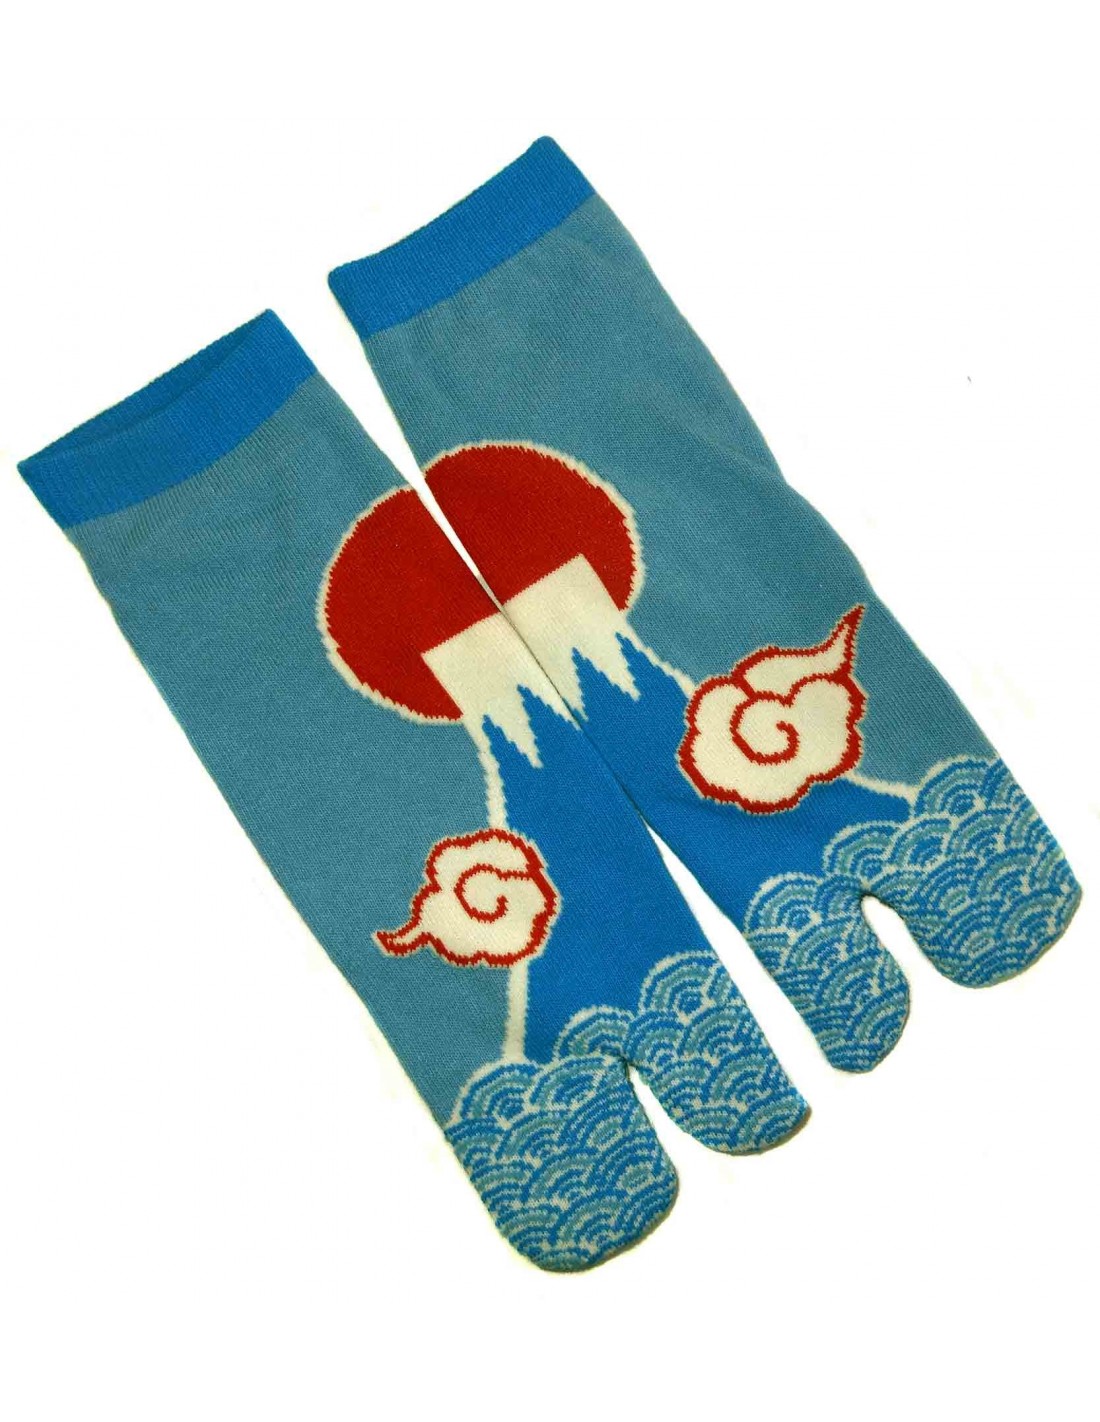 The Tabi Socks